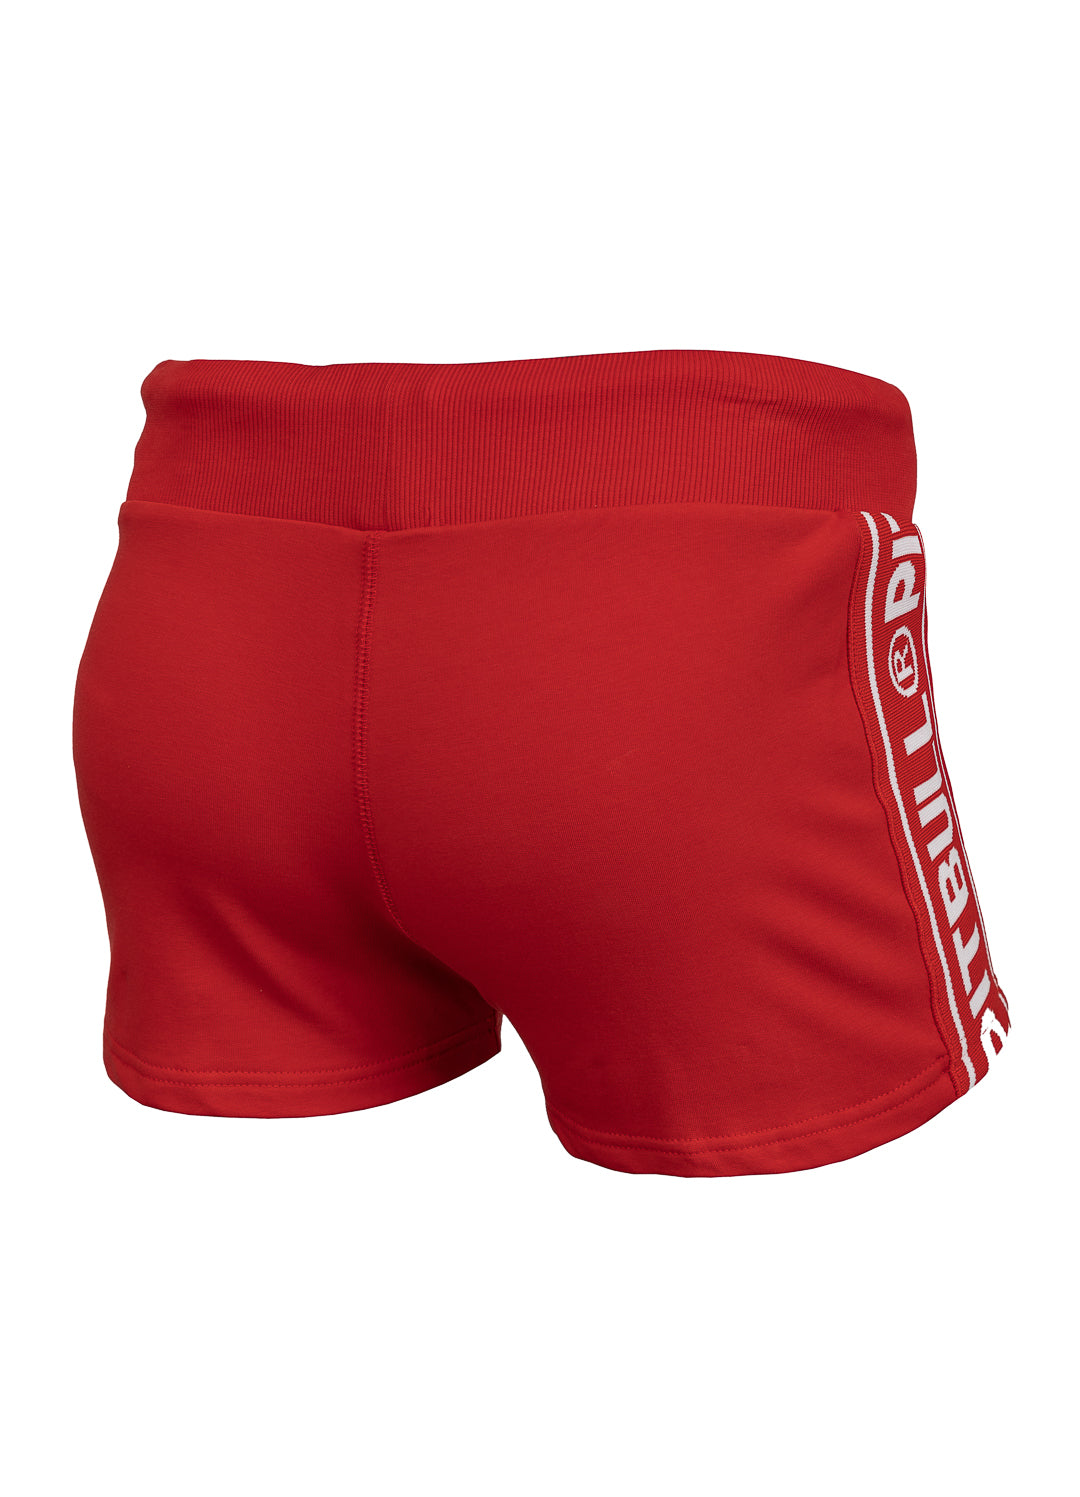 Women's shorts GLORIA French Terry Red - Pitbull West Coast International Store 